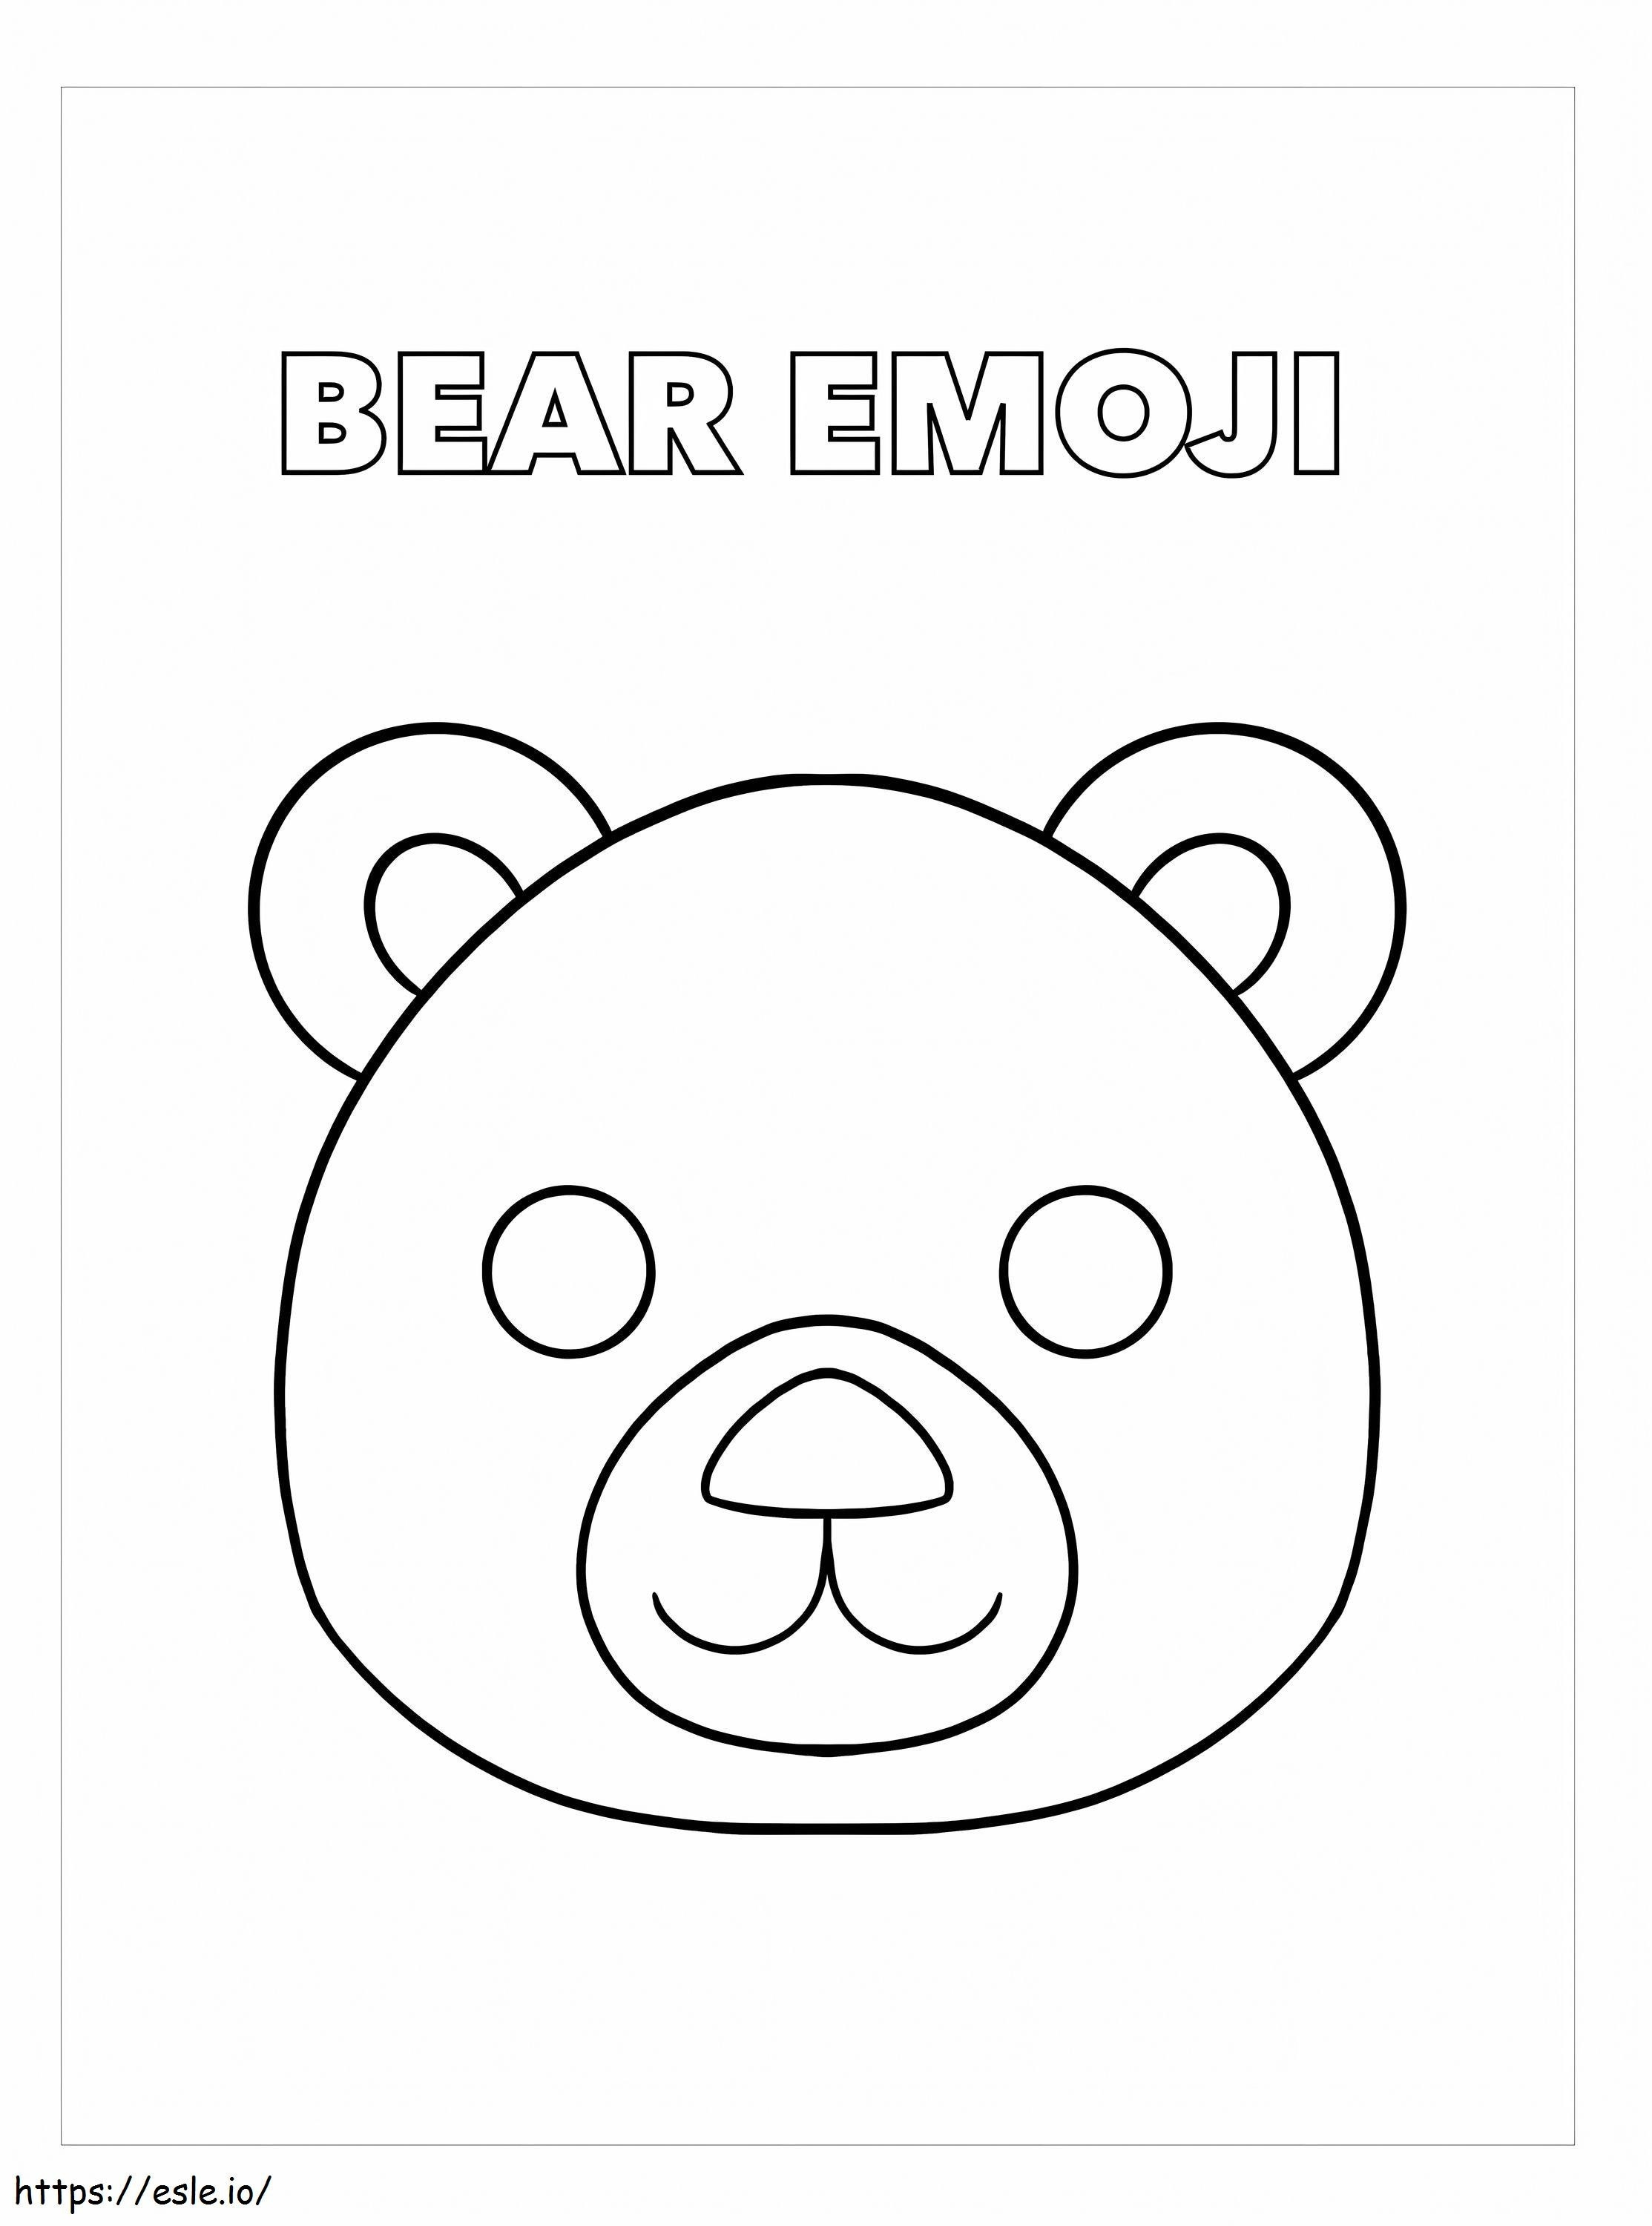 Very Emoji coloring page